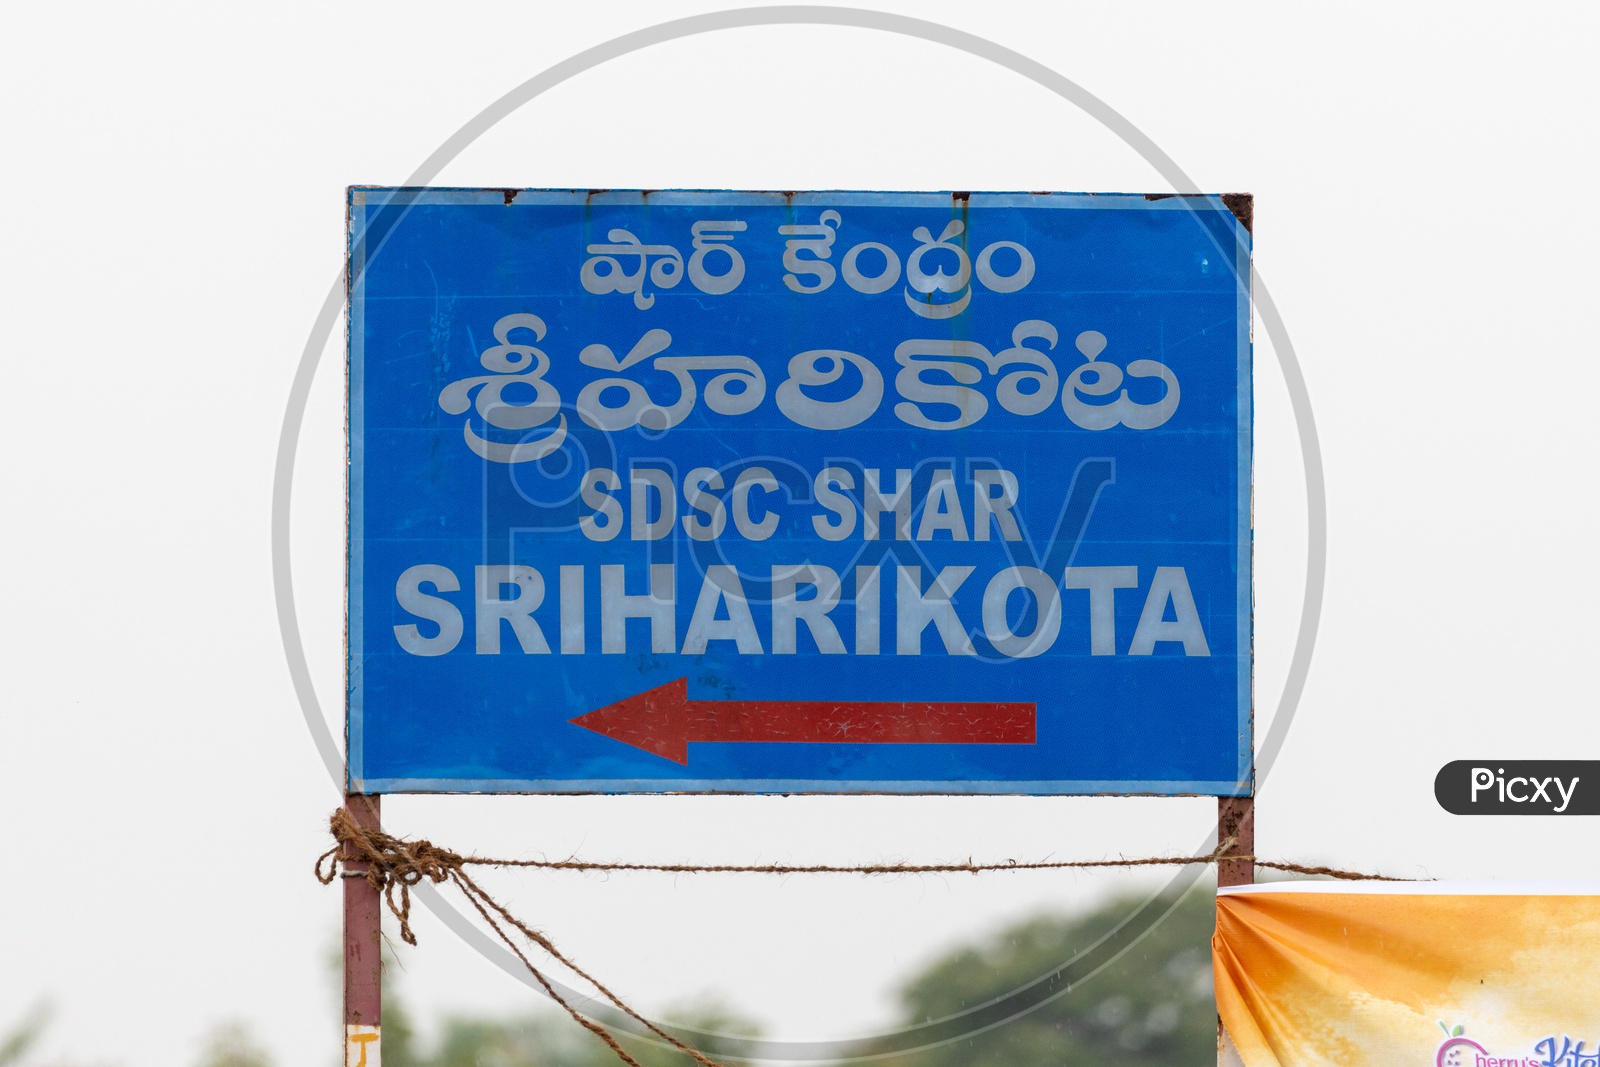 Name And Direction Or Sign  Board For  SHAR , Sriharikota